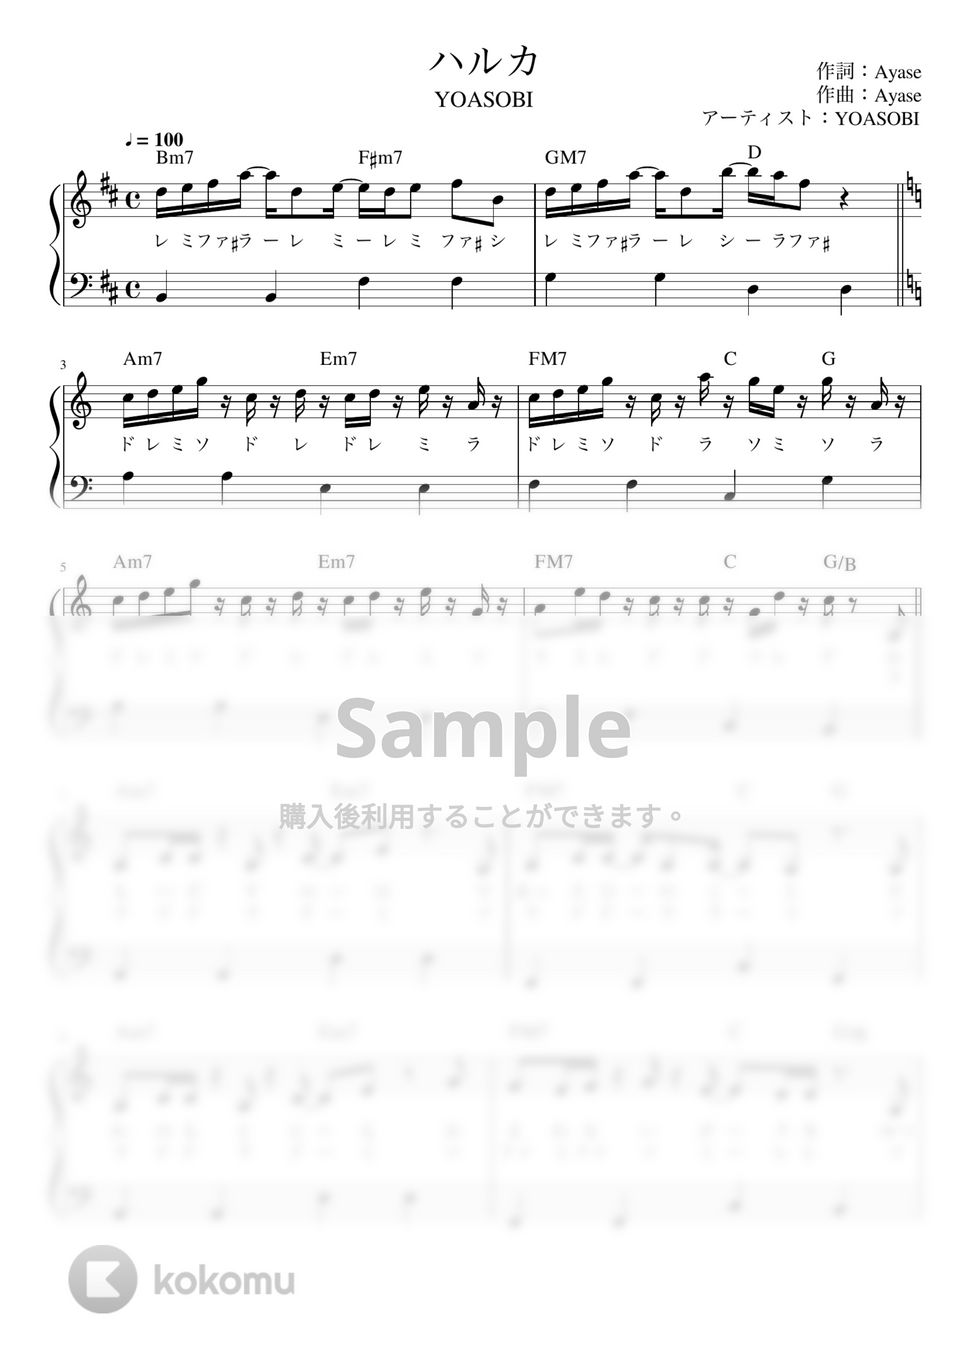 YOASOBI - ハルカ (かんたん / 歌詞付き / ドレミ付き / 初心者) by piano.tokyo